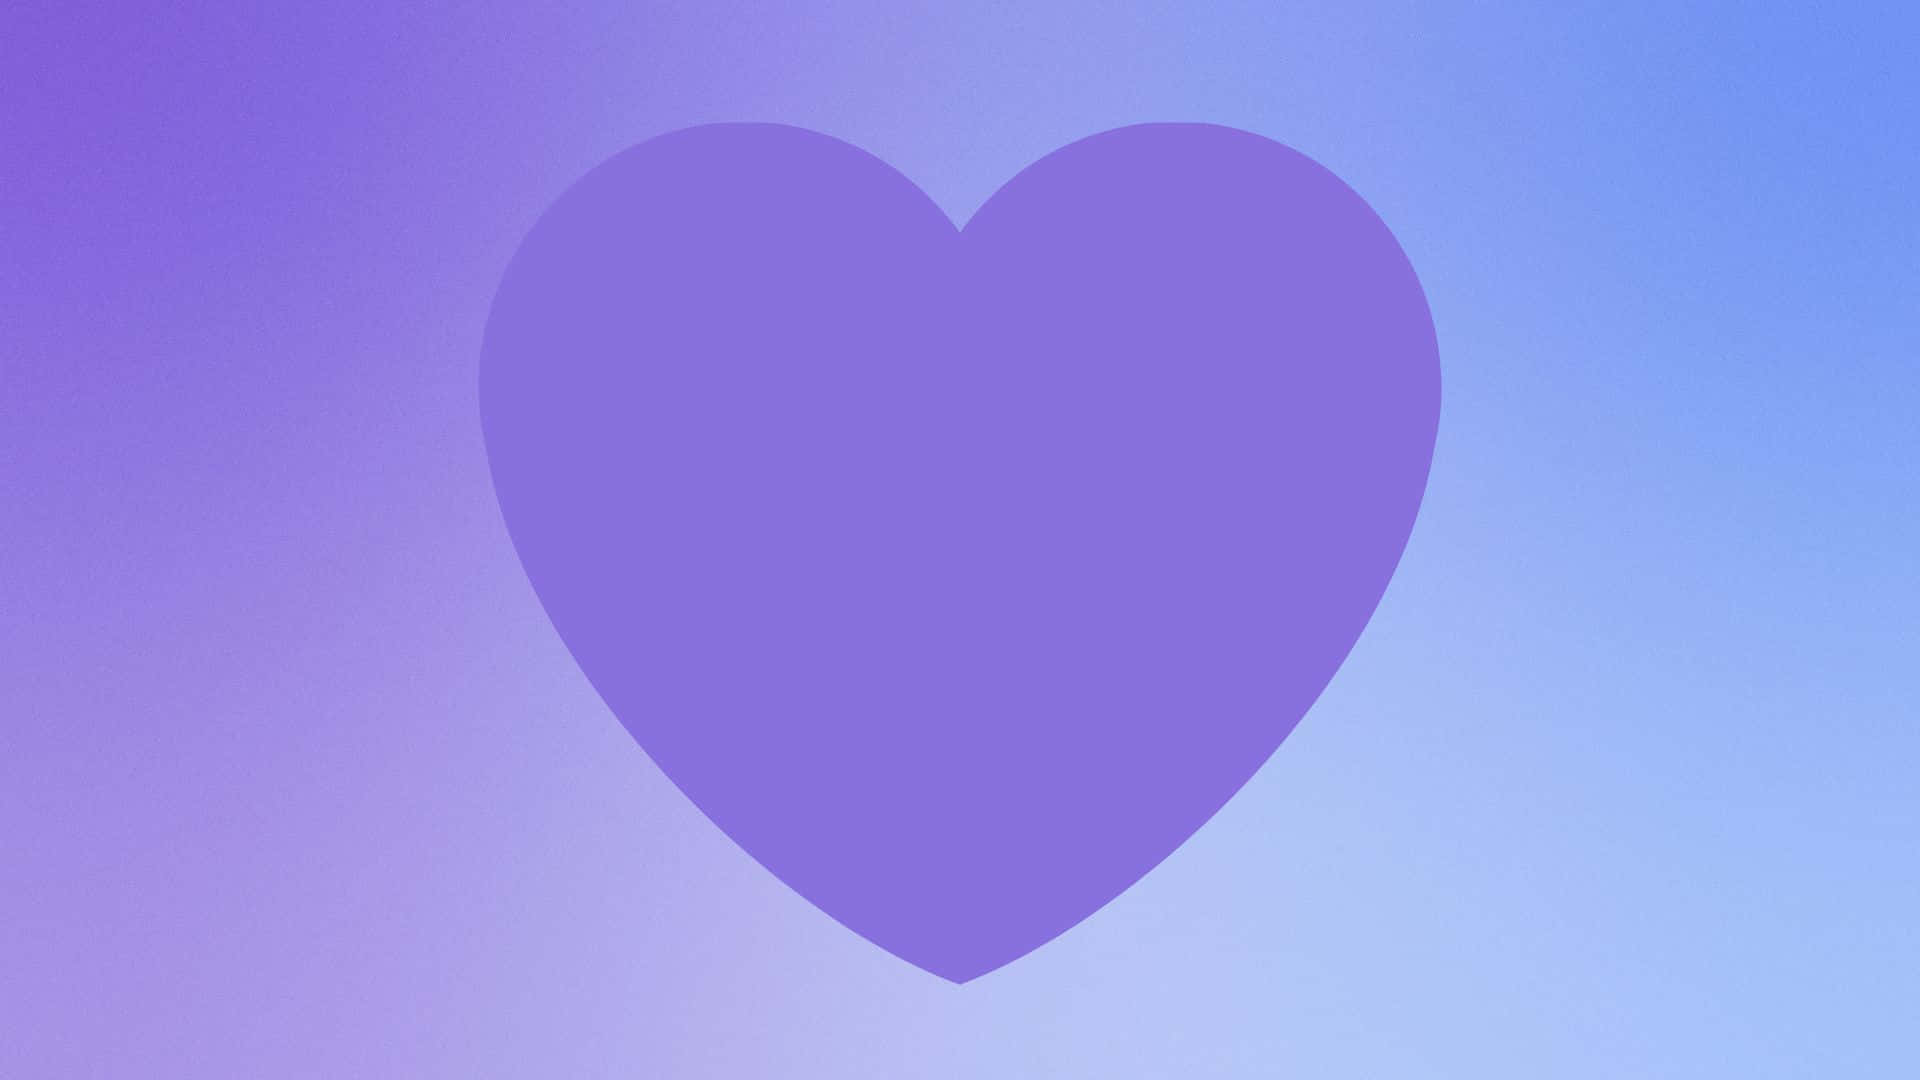 Purple Hearts and Diamonds Phone Live Wallpaper - free download